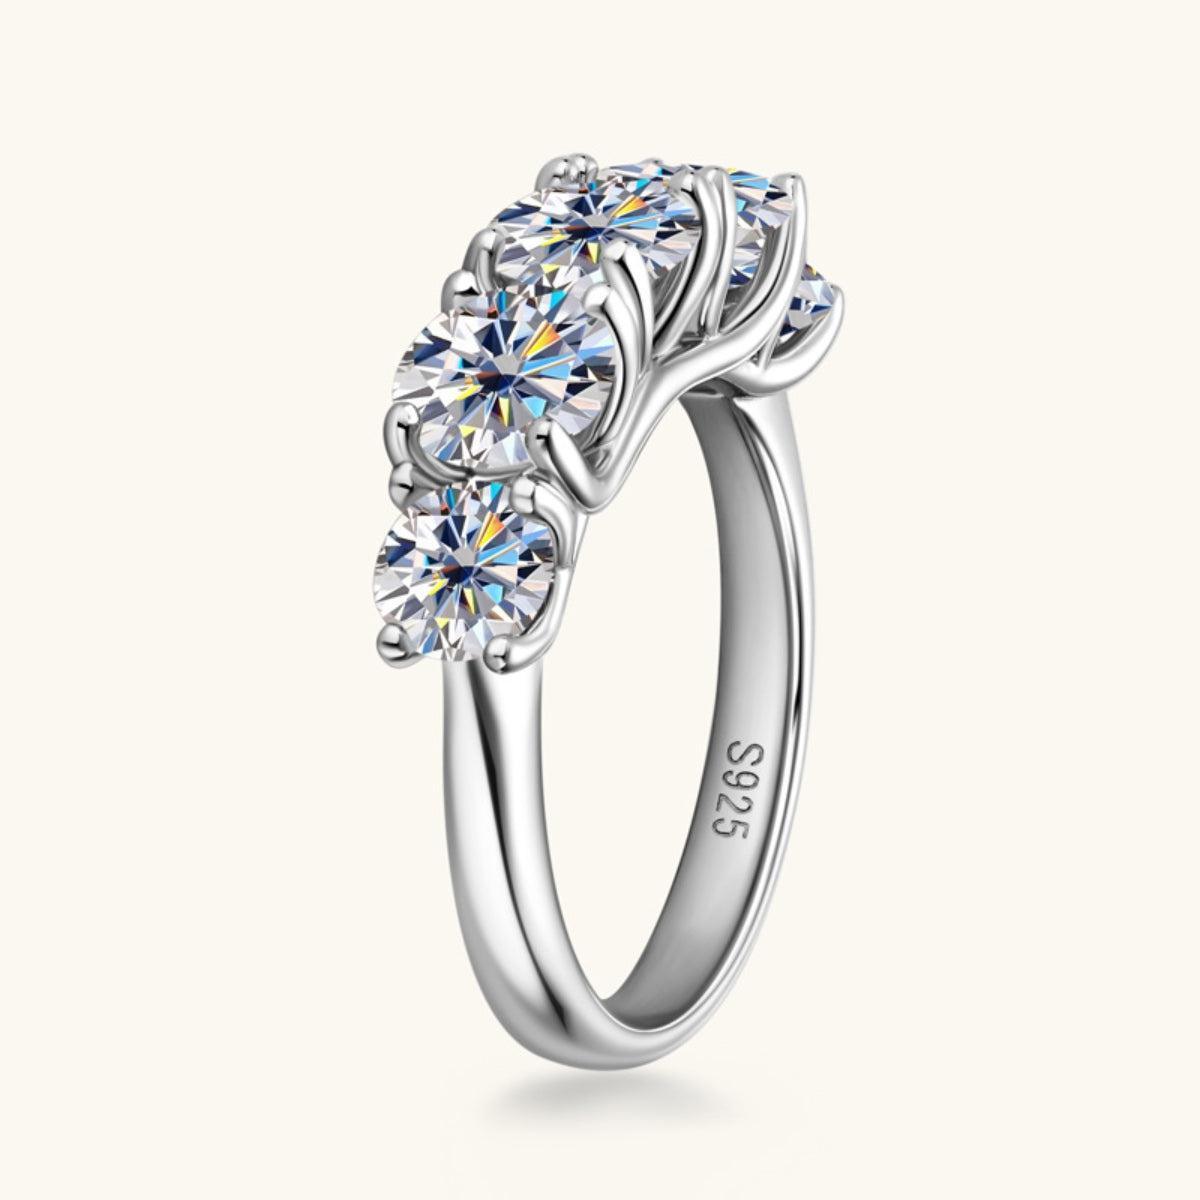 a three stone engagement ring with three diamonds